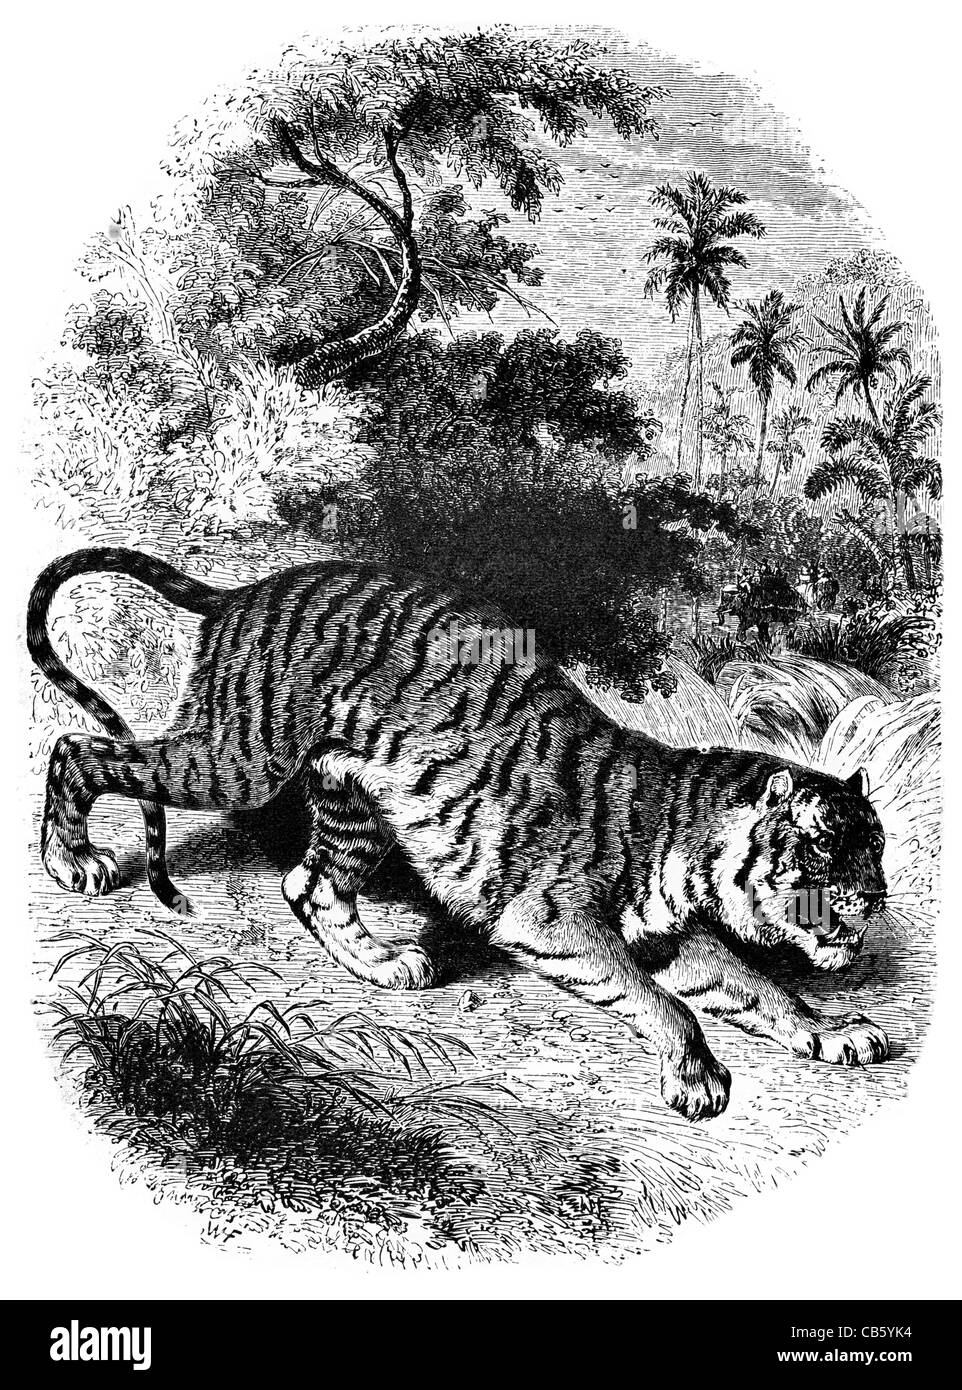 Tiger Jagd Jagd Räuber Beute vom Aussterben bedrohte Tier Pelz drucken Dschungel Pfote Klaue Zähne stalking Stockfoto